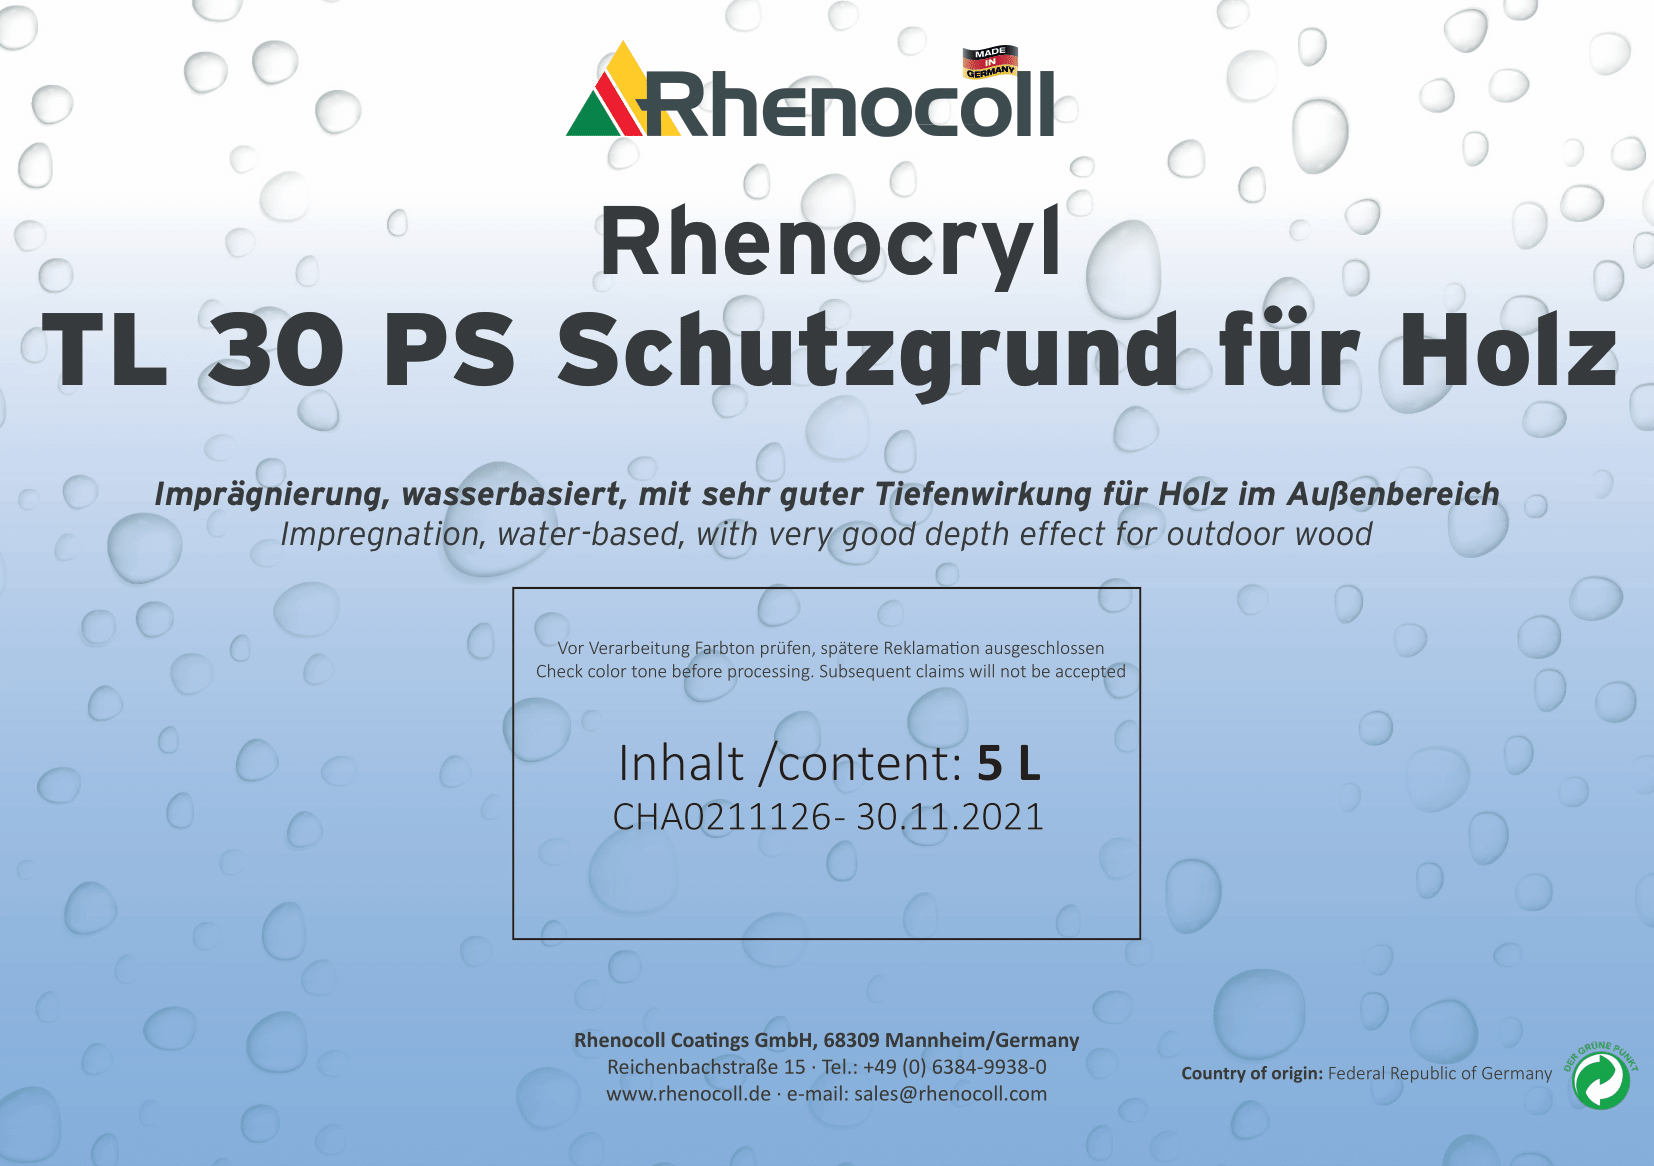 Rhenocryl TL 30 PS Schutzgrund für Holz